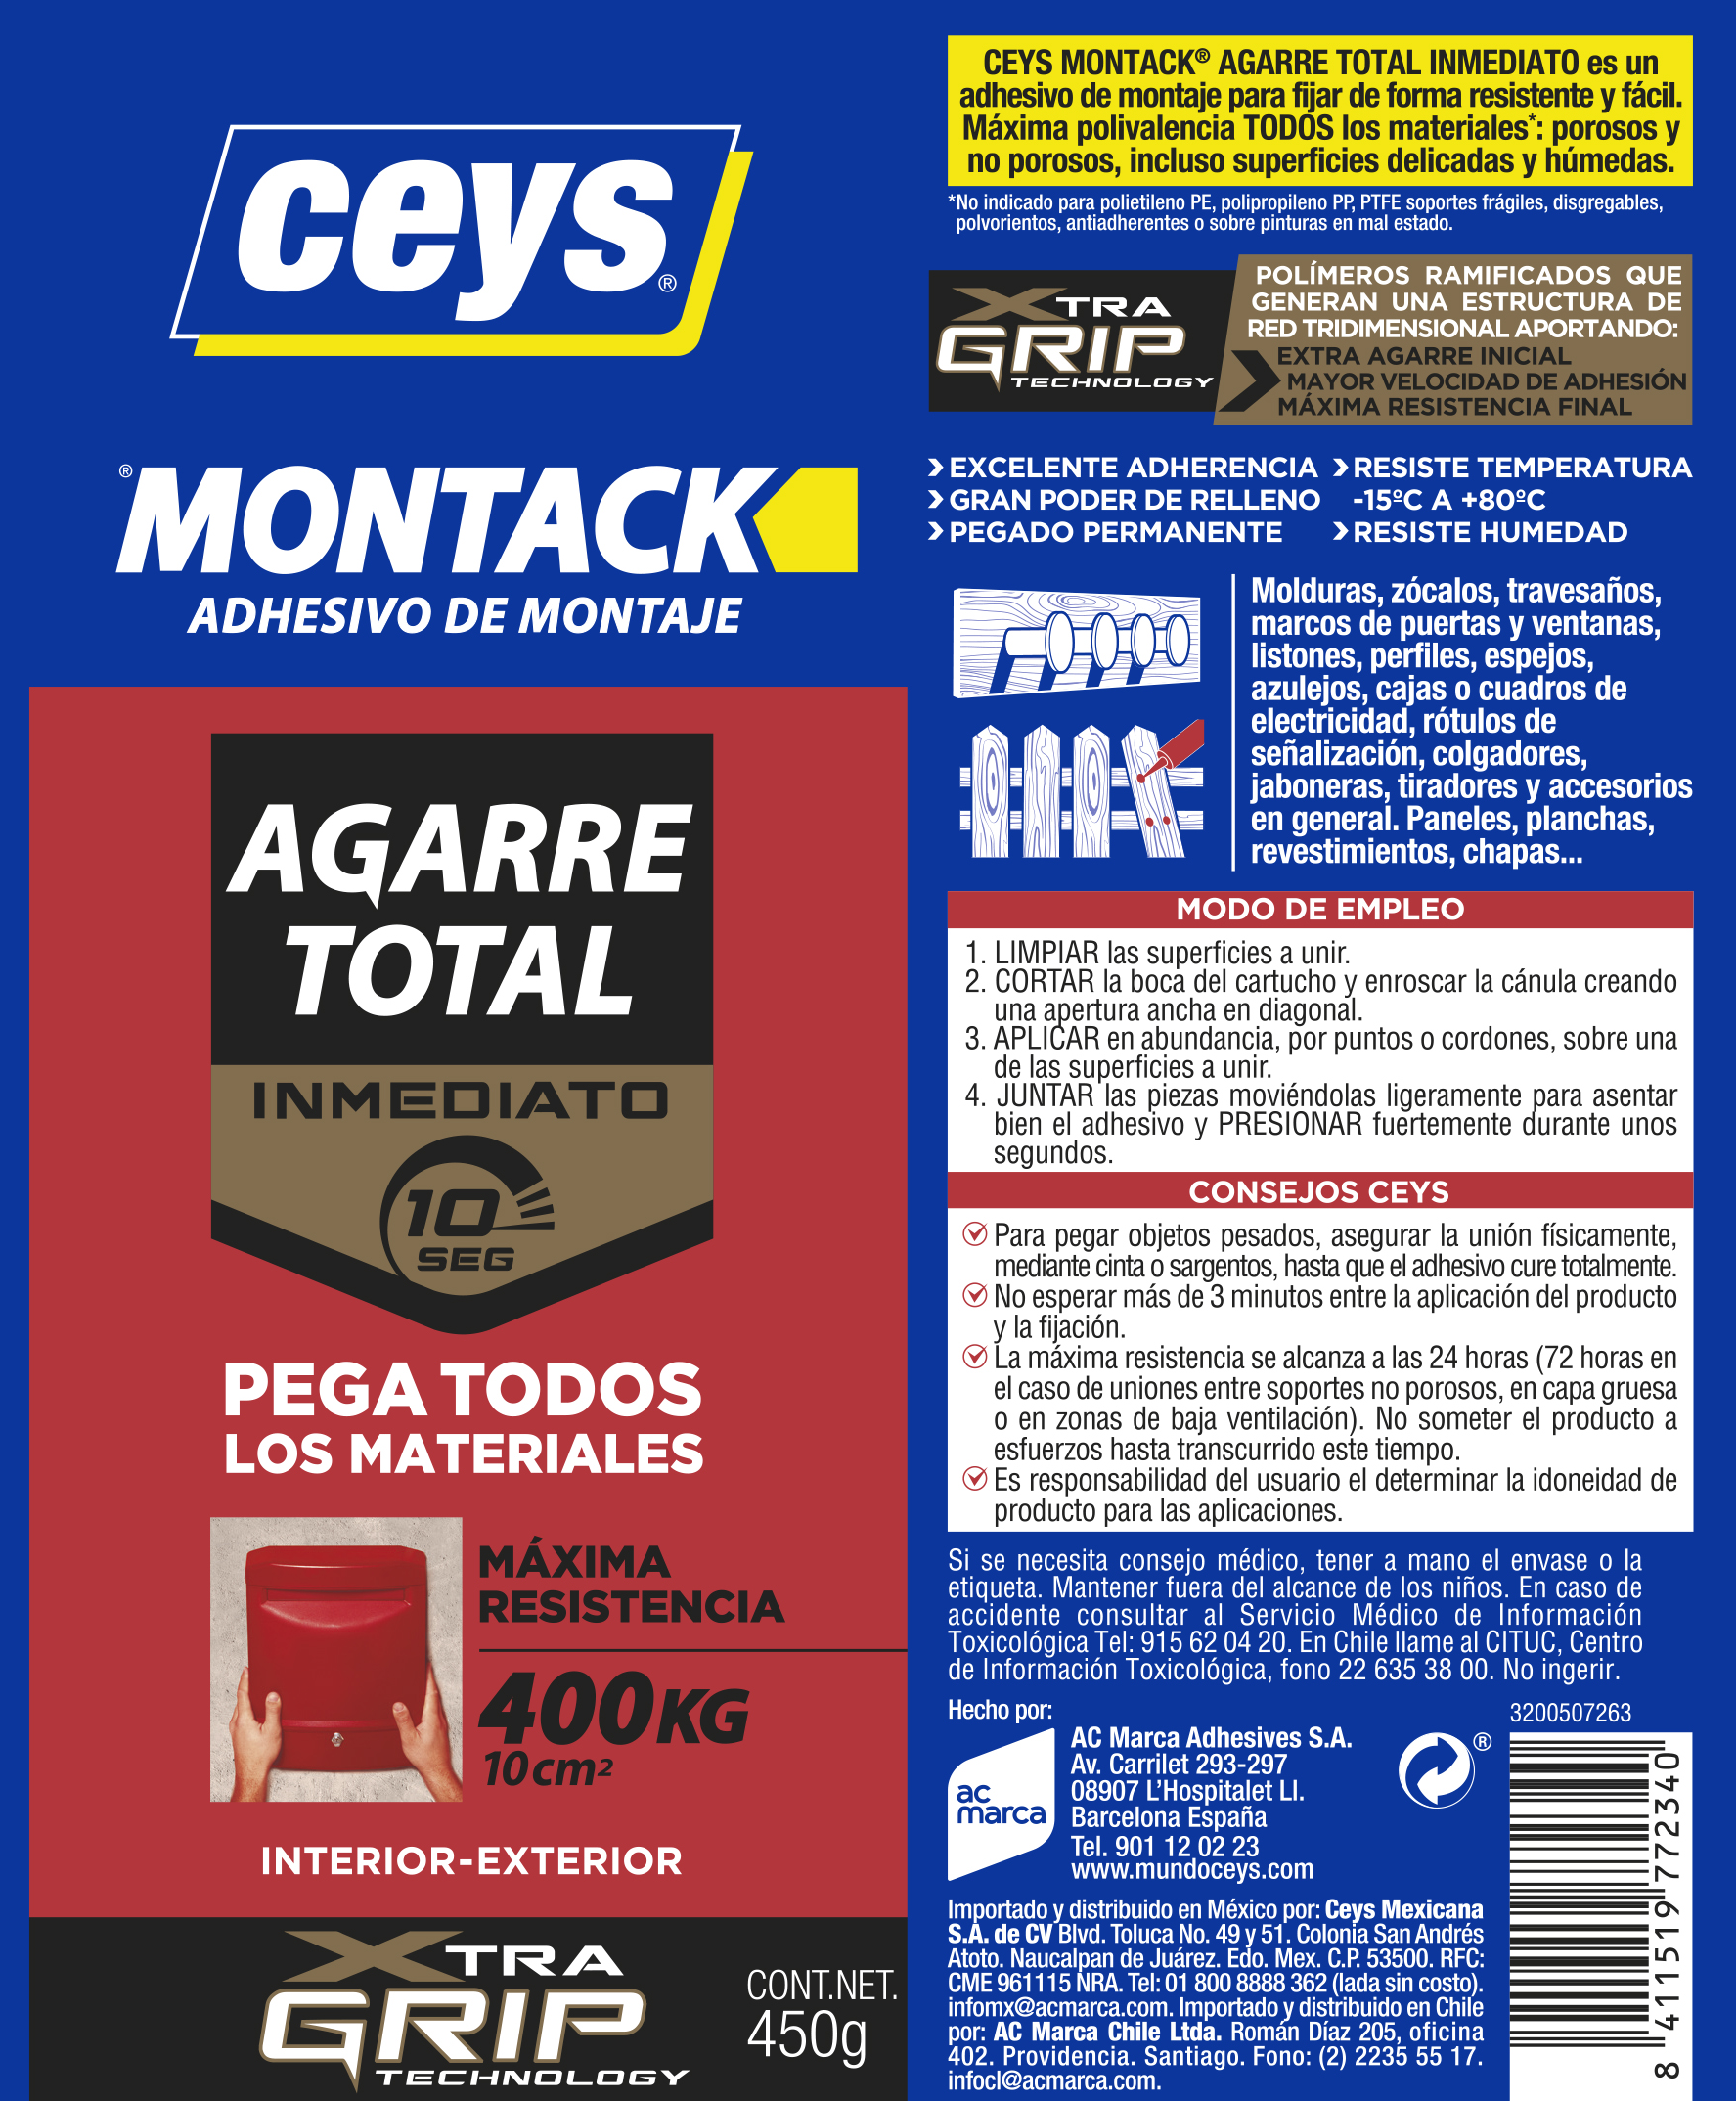 Adhesivo Montack agarre total inmediato 315gr - Ceys